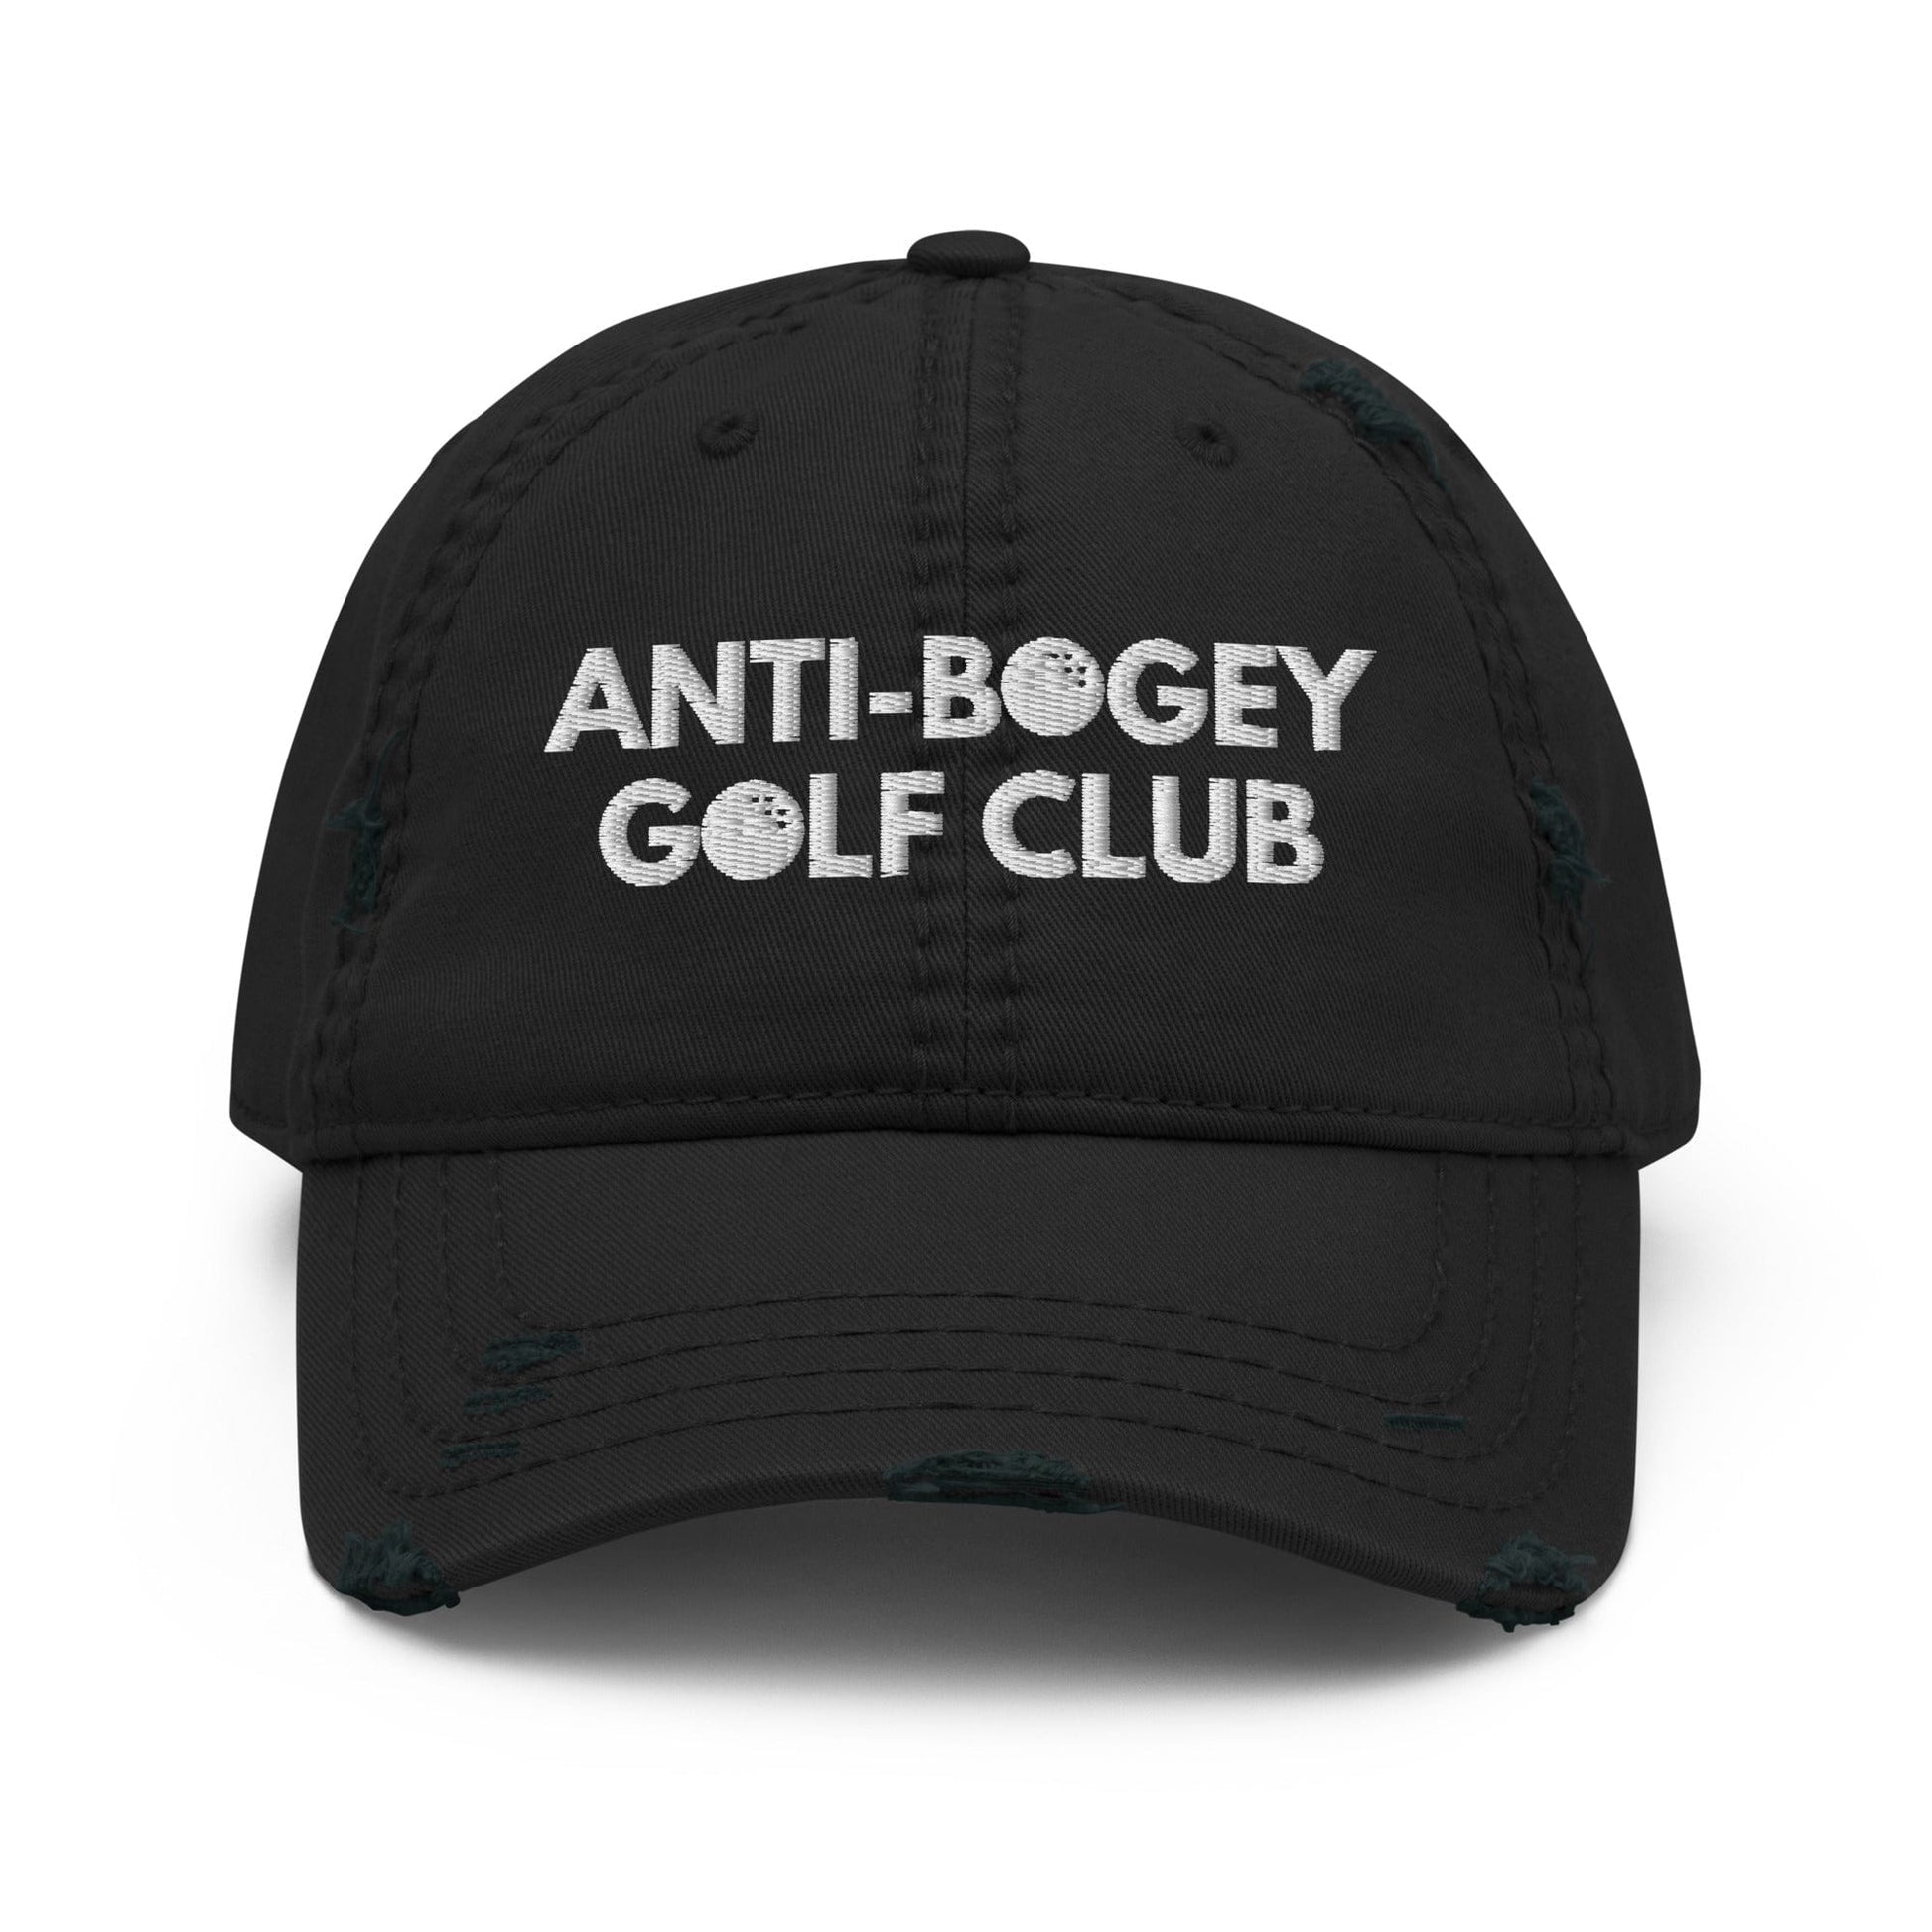 Funny Golfer Gifts  Distressed Cap Black Anti-Bogey Golf Club Hat Distressed Hat